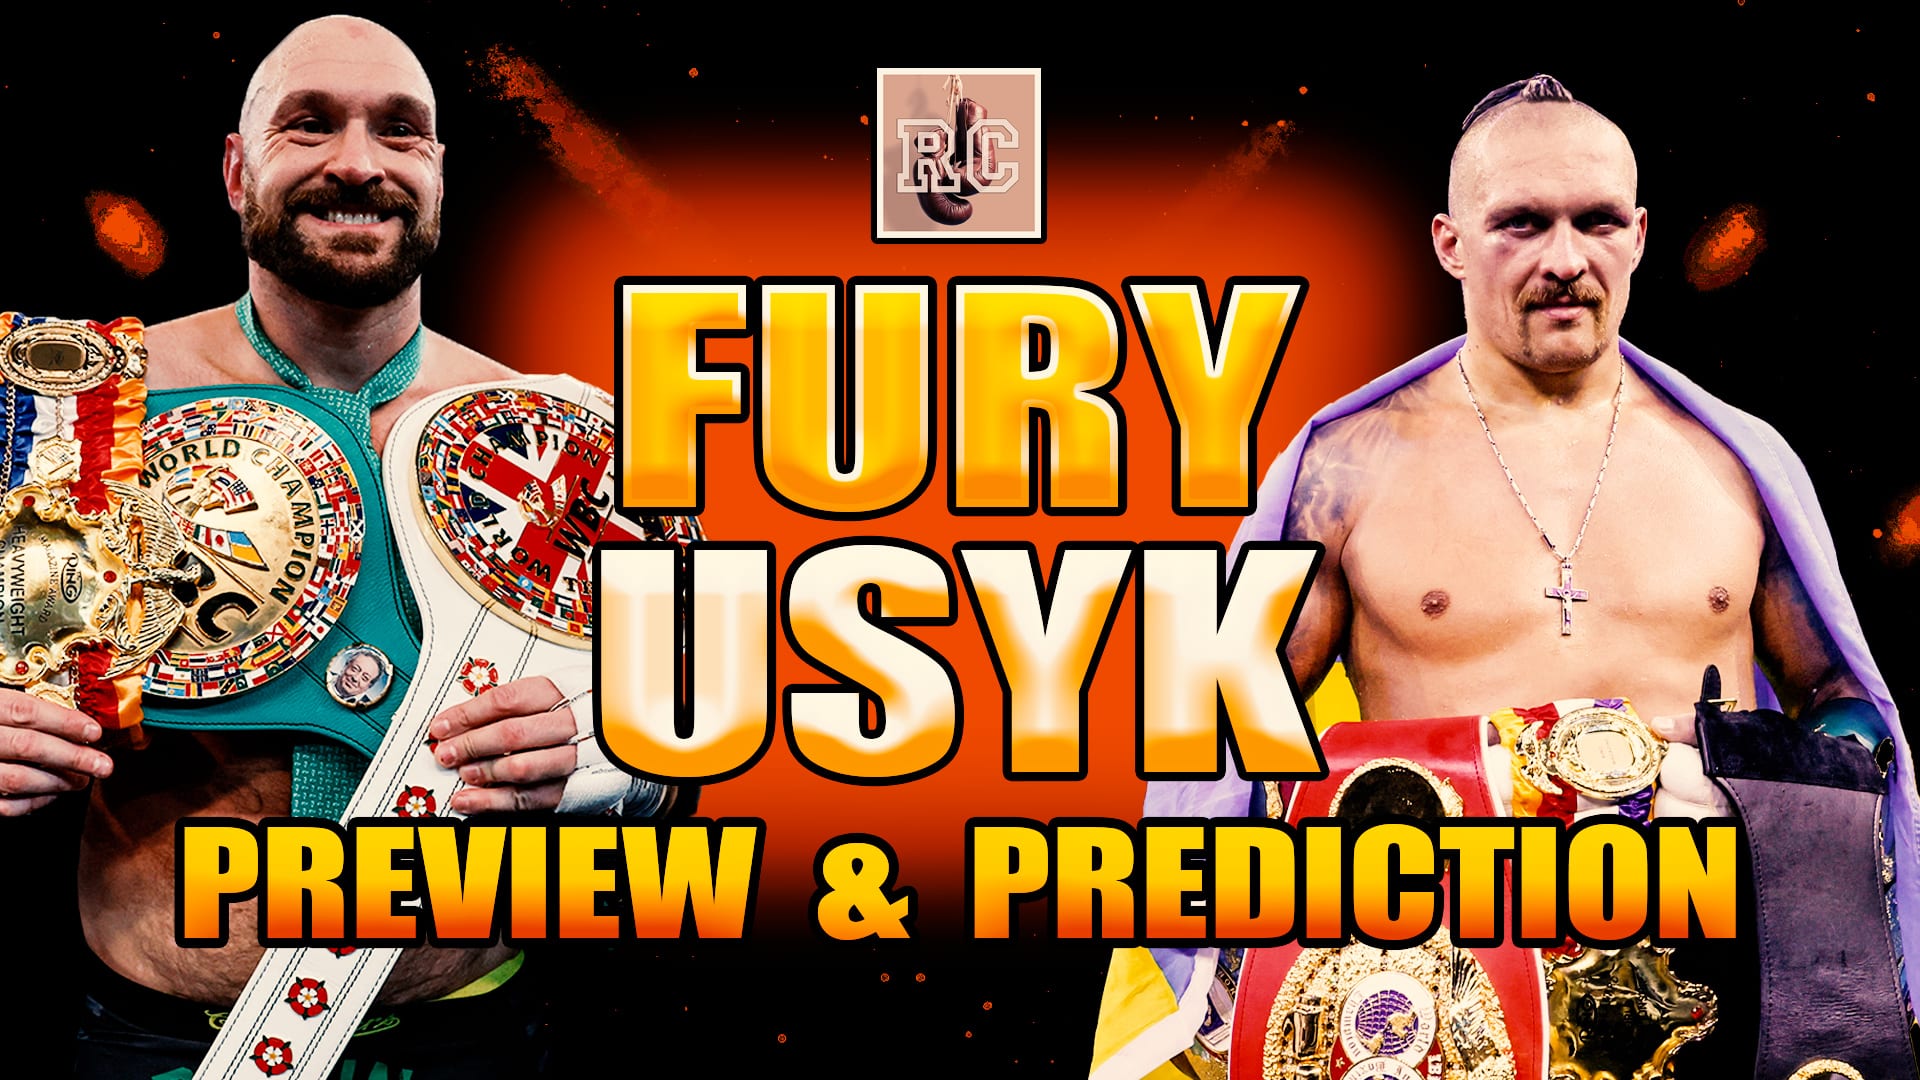 Image: Tyson Fury vs Oleksandr Usyk - Preview & Prediction VIDEO